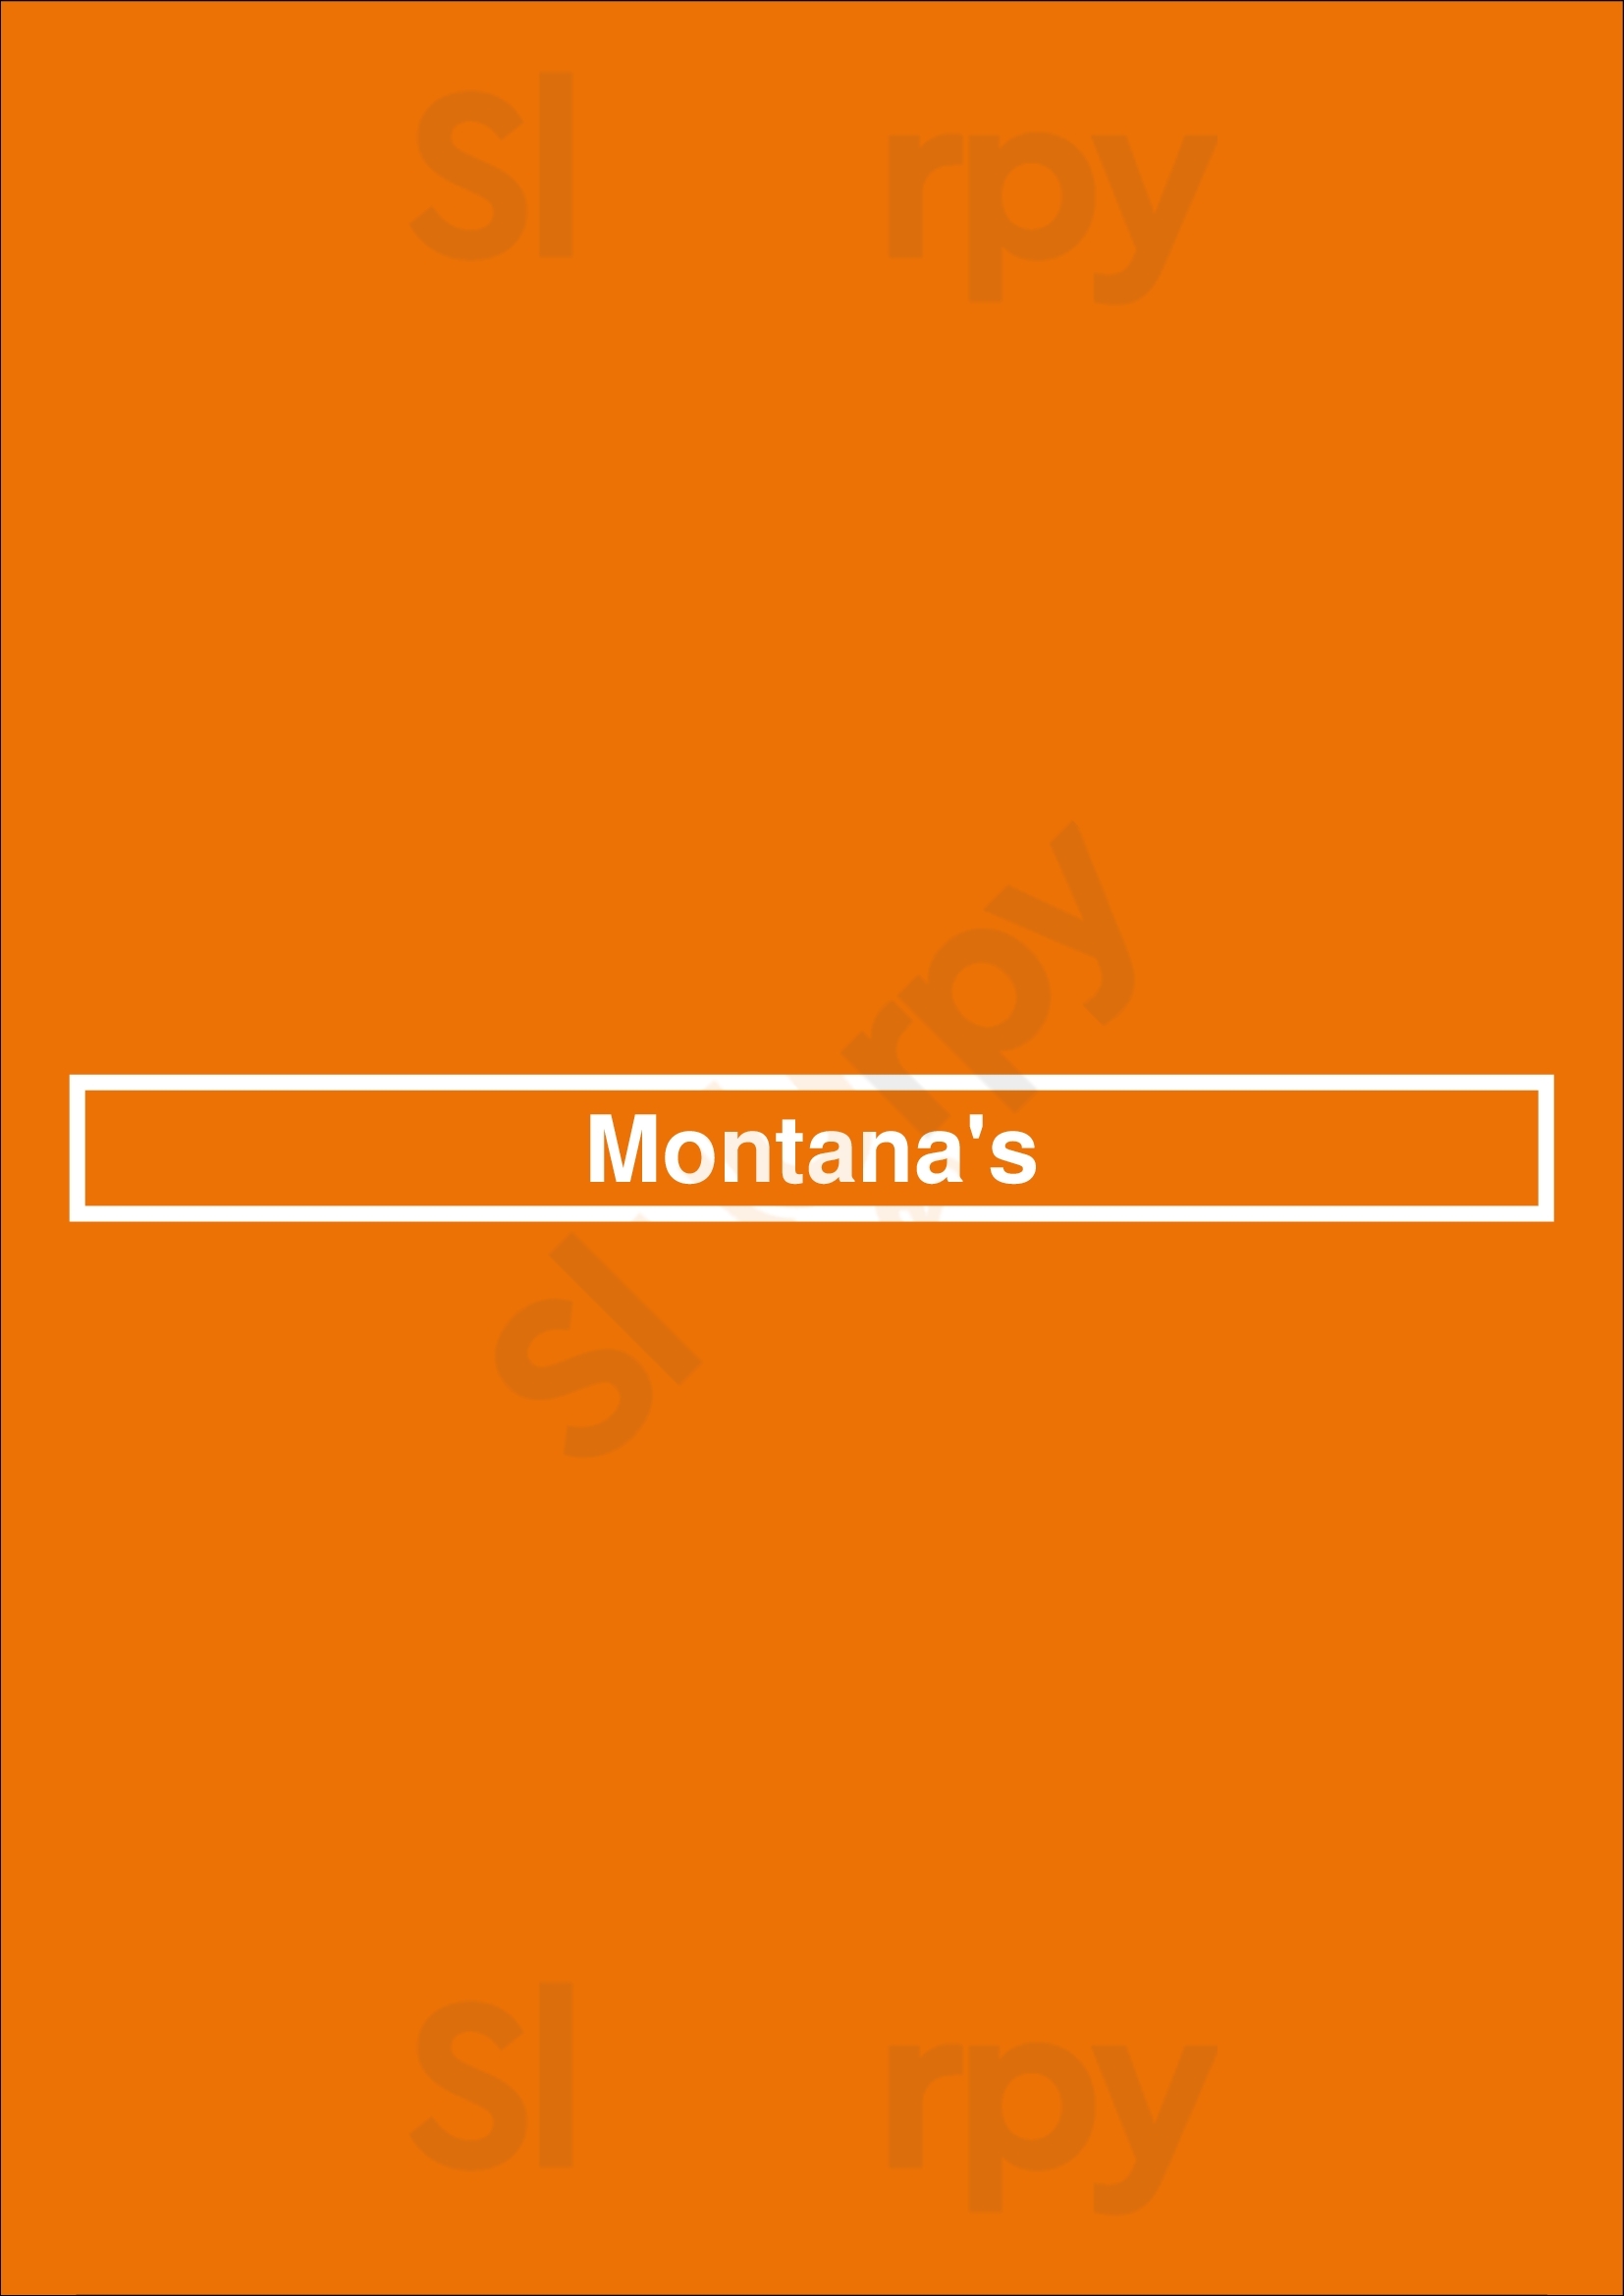 Montana's Milton Menu - 1